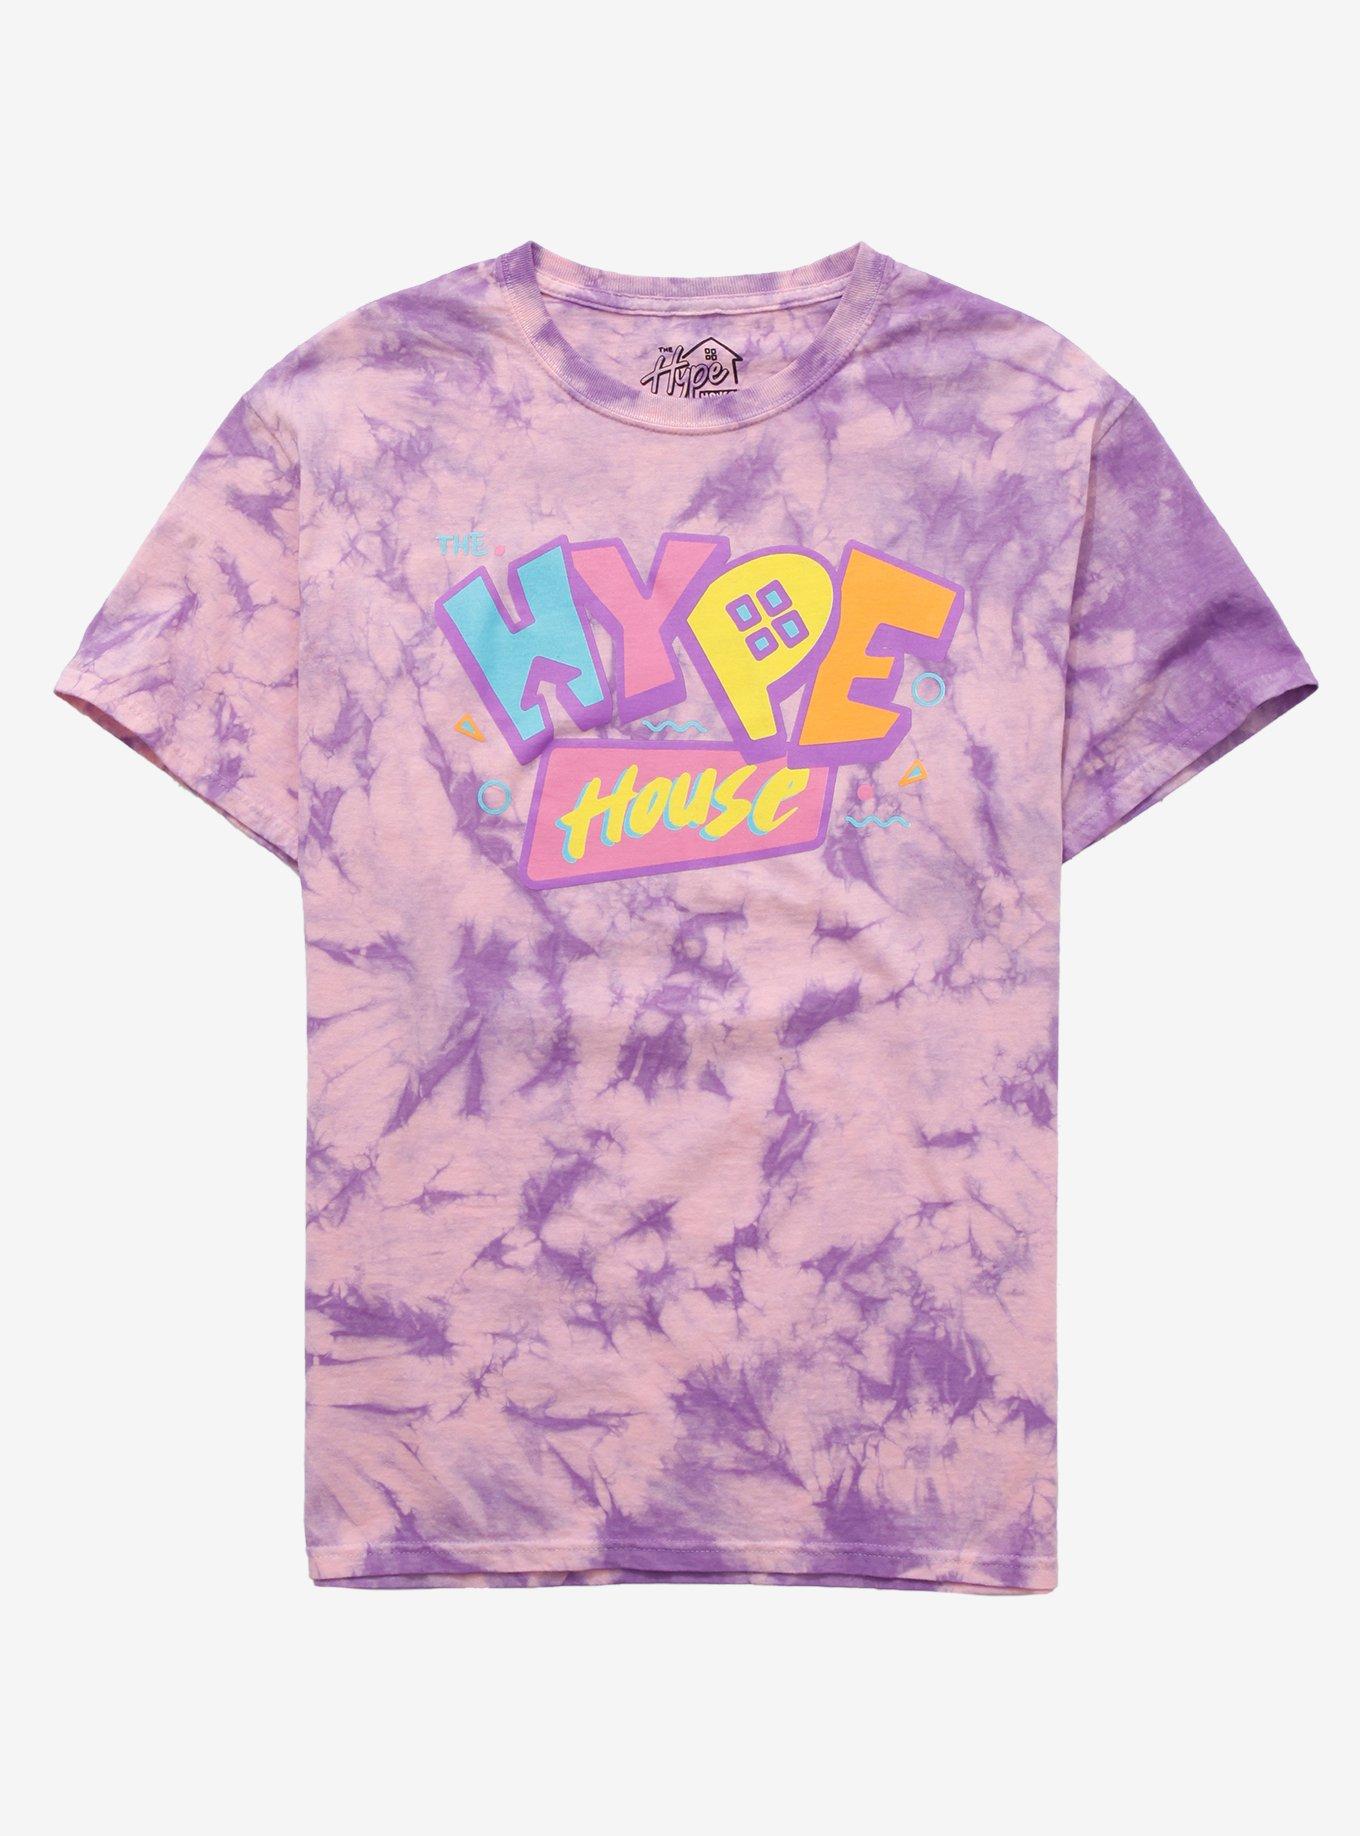 The Hype House Tie-Dye Boyfriend Fit Girls T-Shirt | Hot Topic